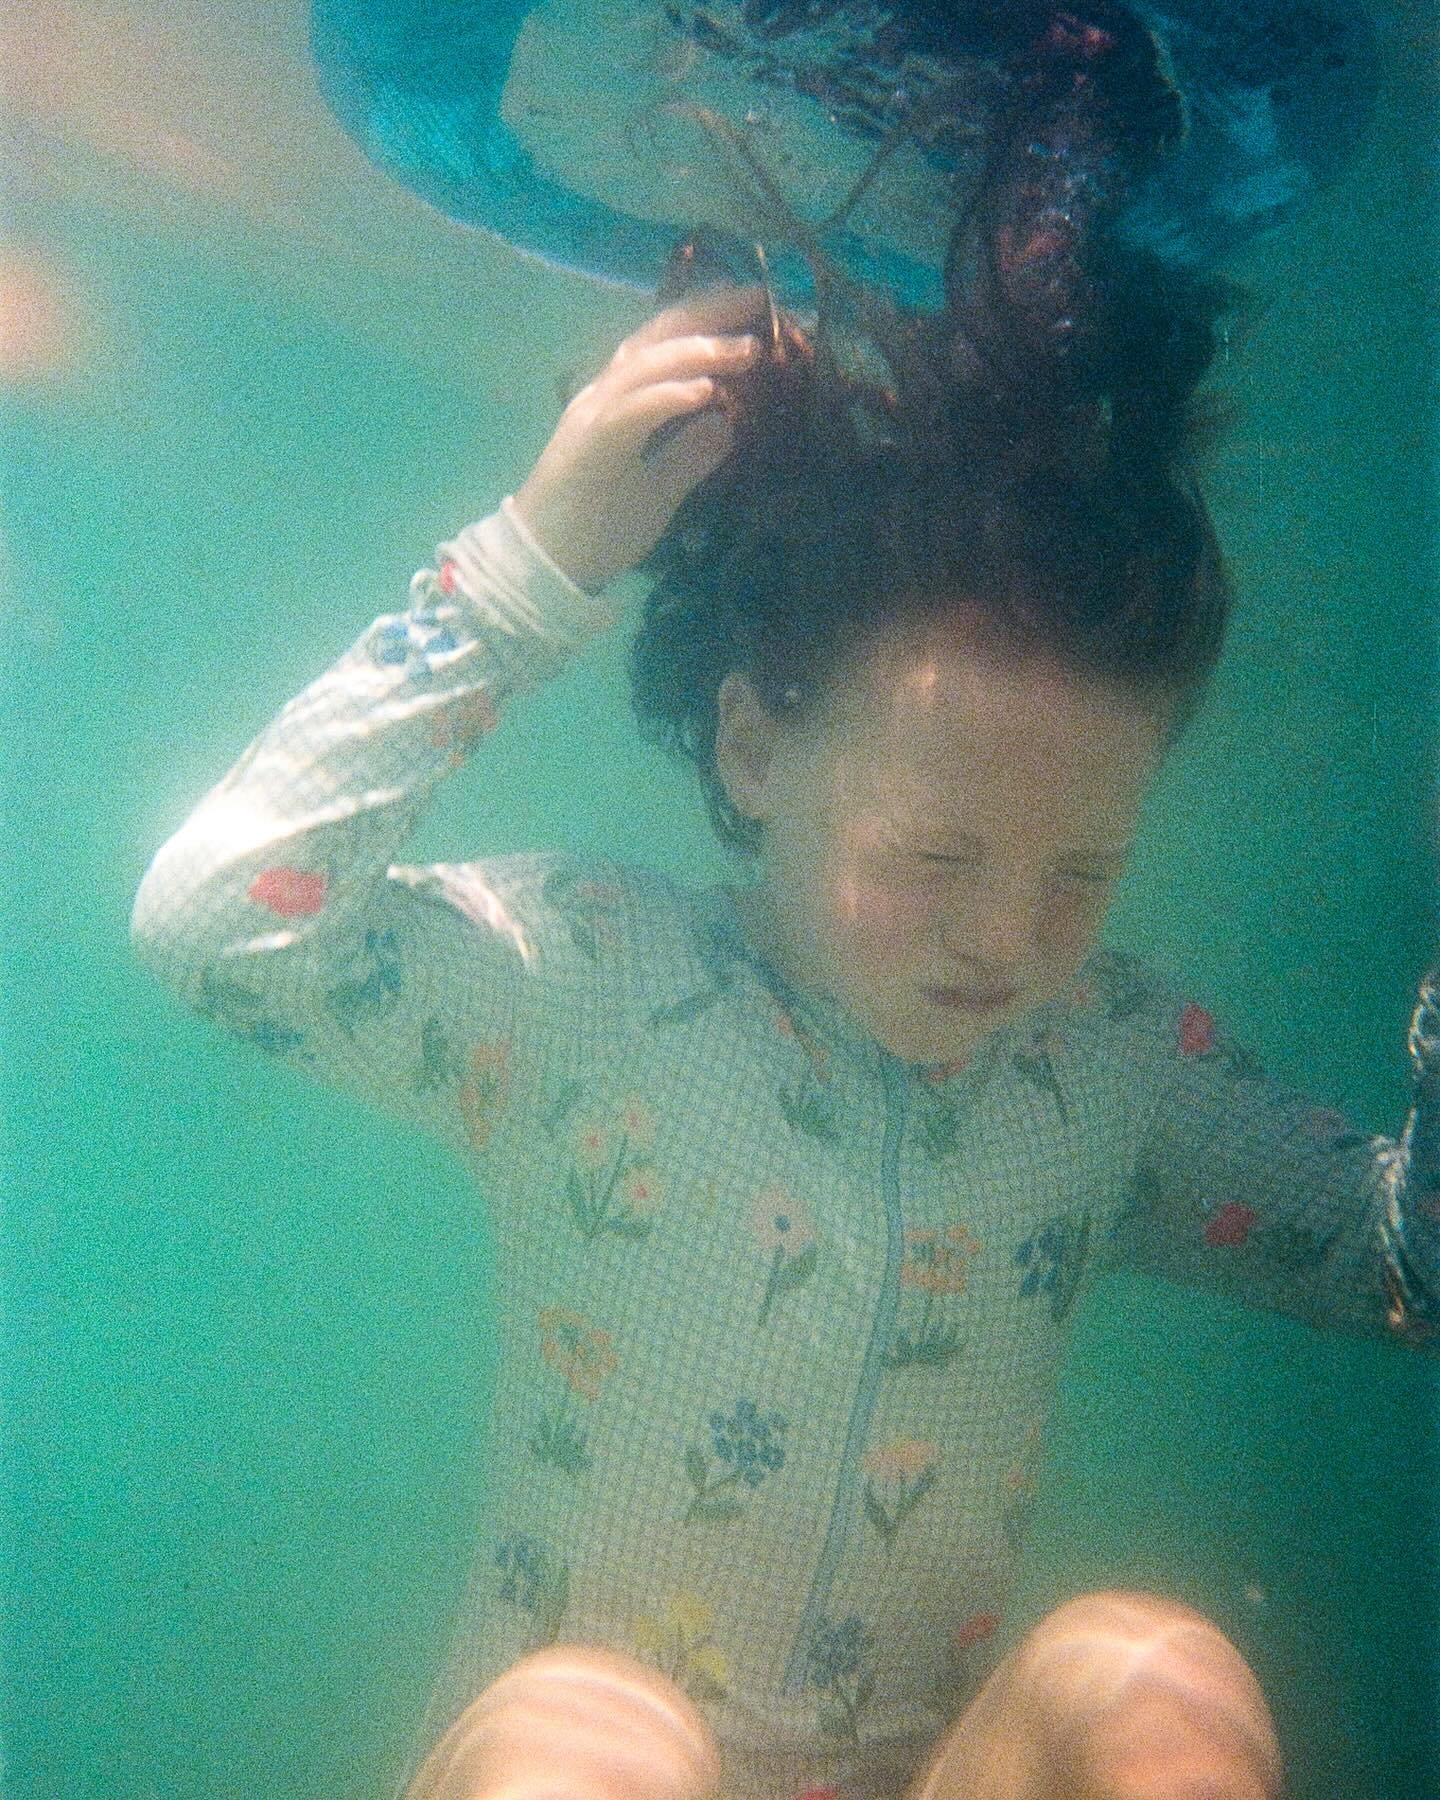 Chaotic 
Serendipitous
Pacified

#nikonos #nikonosii #underwaterfilmphotography #35mmfilm #beachport #memorycult